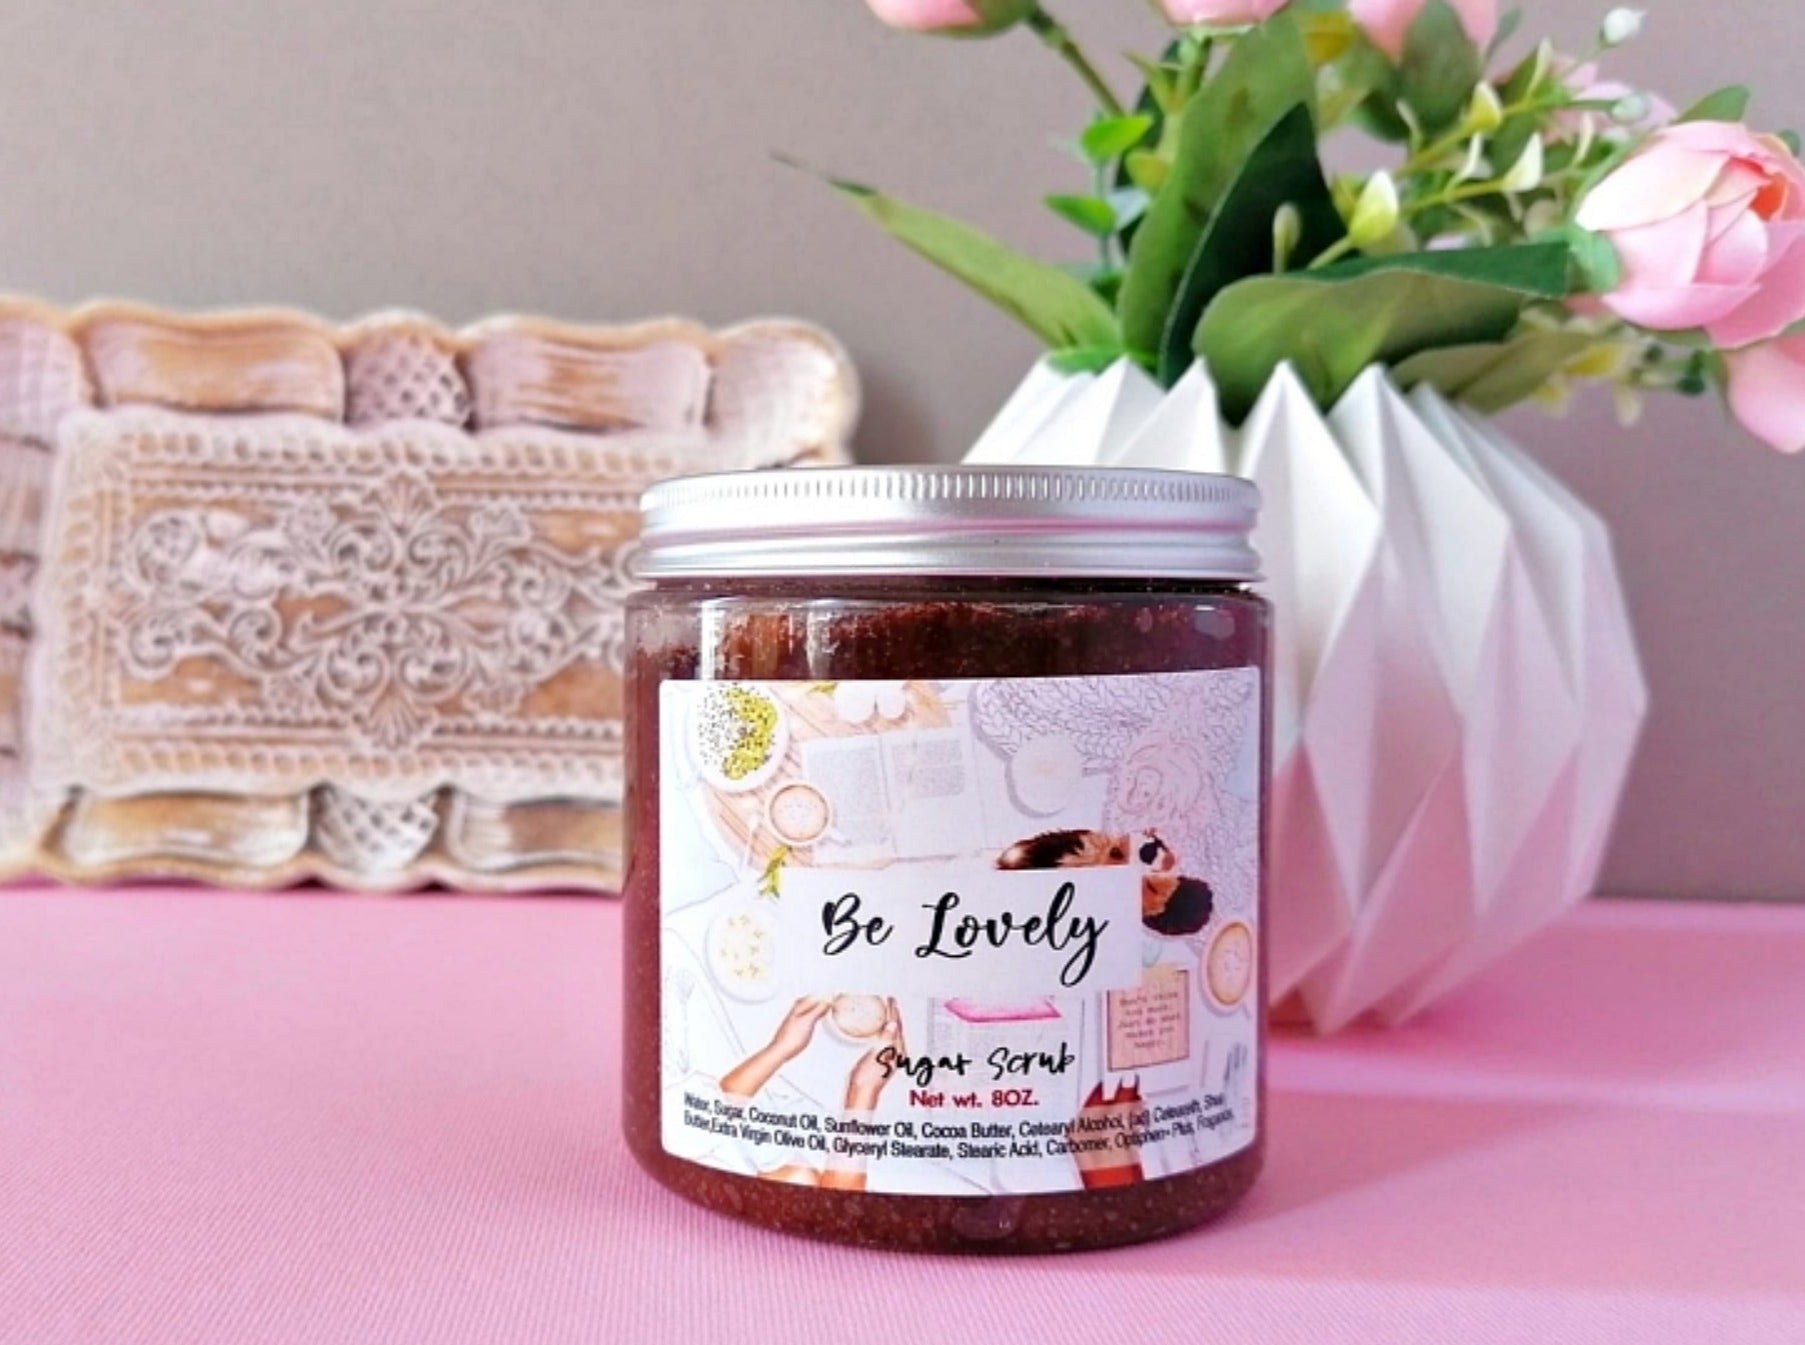 Be lovely | Coconut Oil Sugar Scrub  8oz - PinkFlamingoCandle